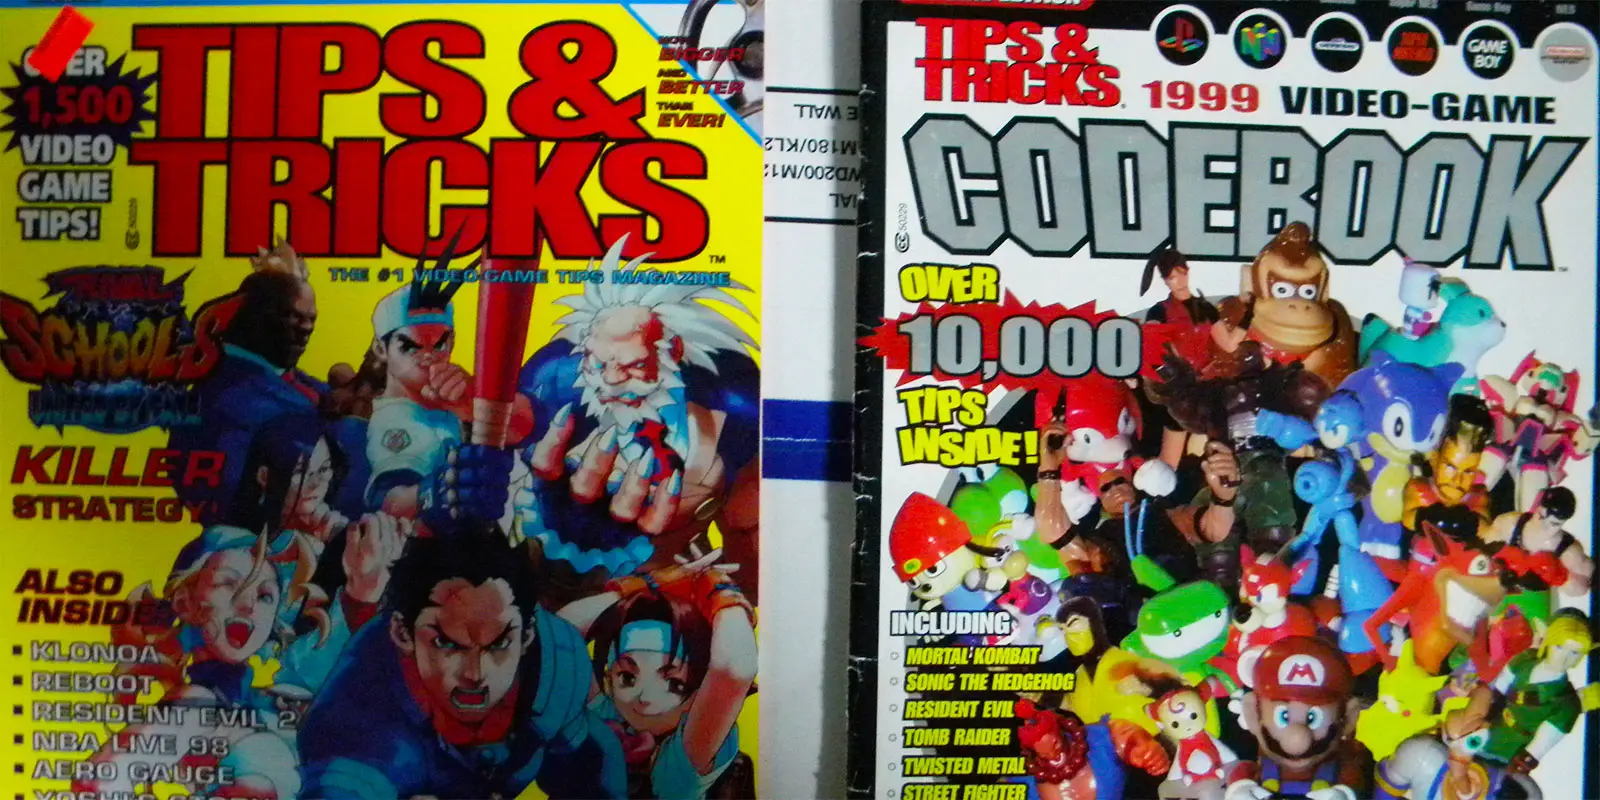 Tips & Tricks Magazine Video Game Codebook Cheats Codes 2006 Sonic